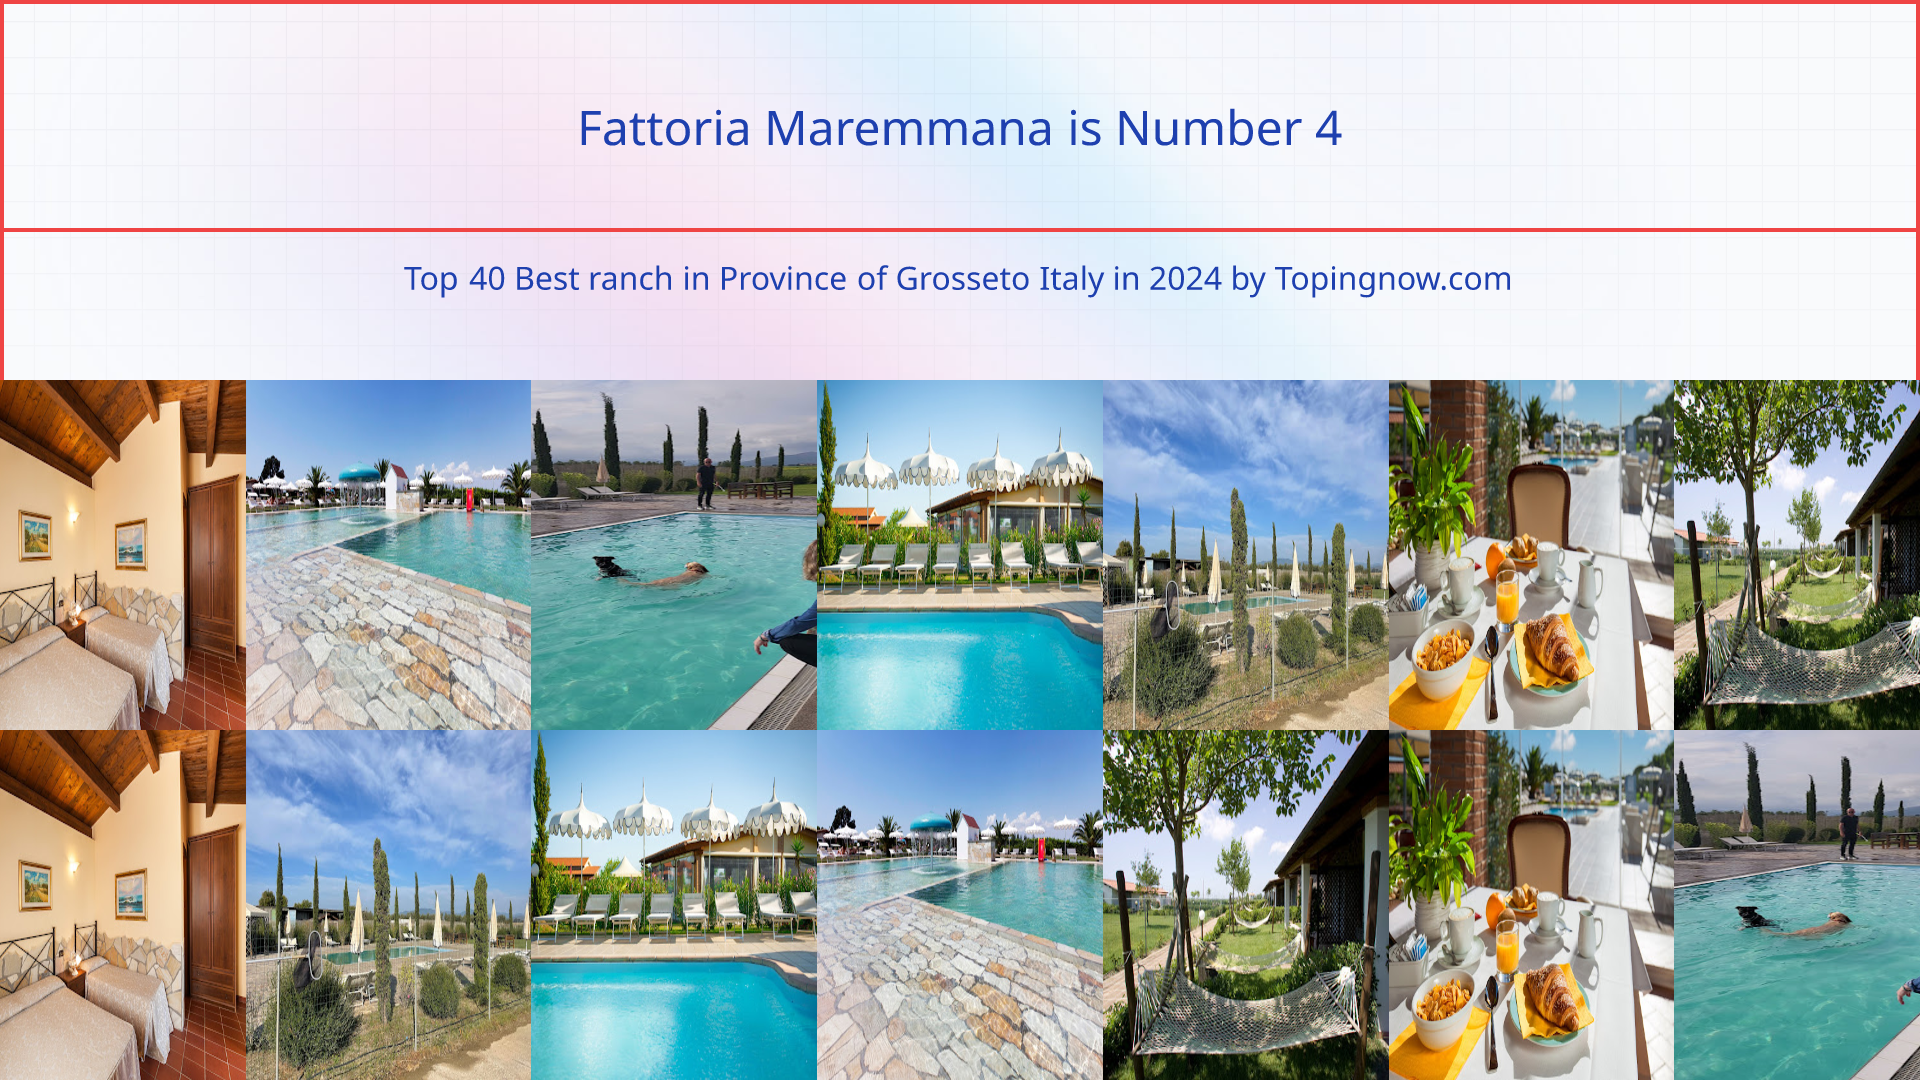 Fattoria Maremmana: Top 40 Best ranch in Province of Grosseto Italy in 2024